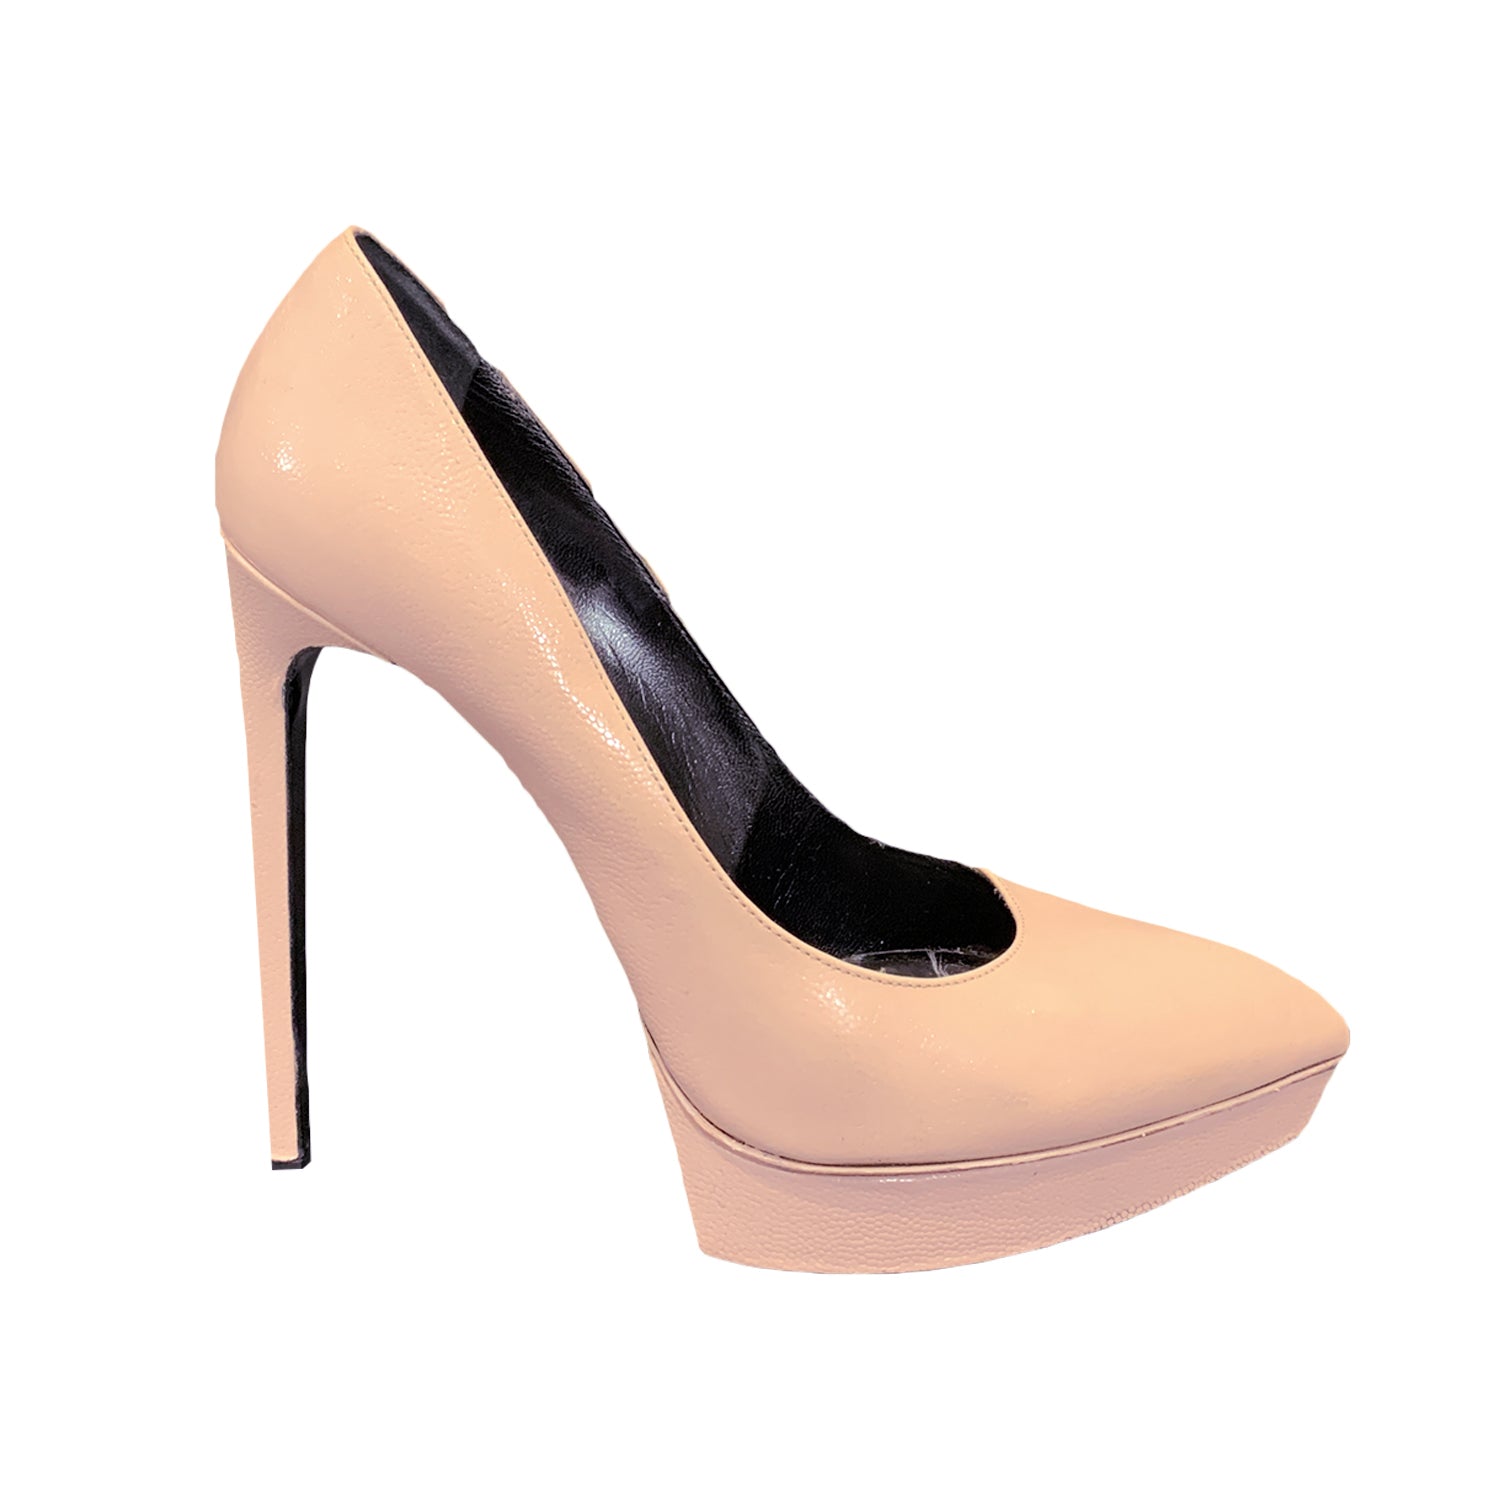 4 inch Platform Heels Collection Trending | up2step